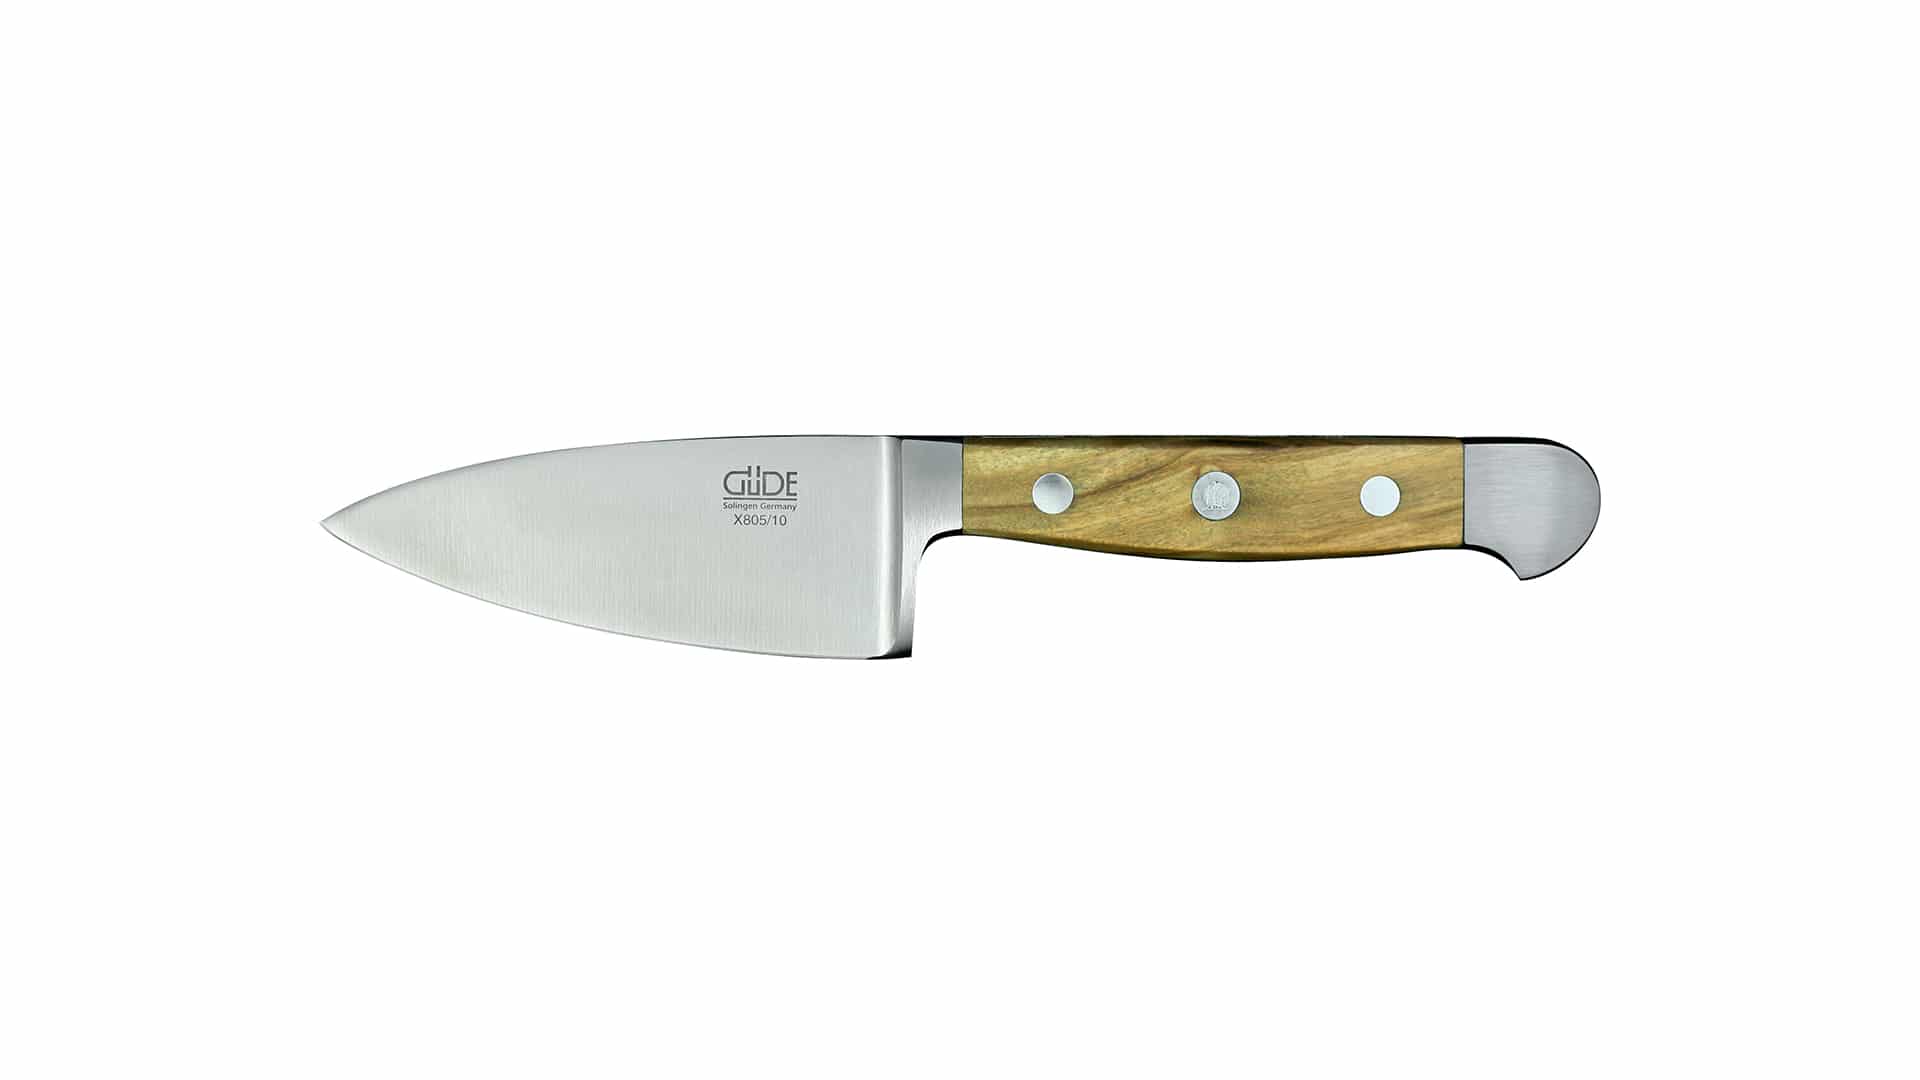 Güde Alpha Olive hard cheese knife